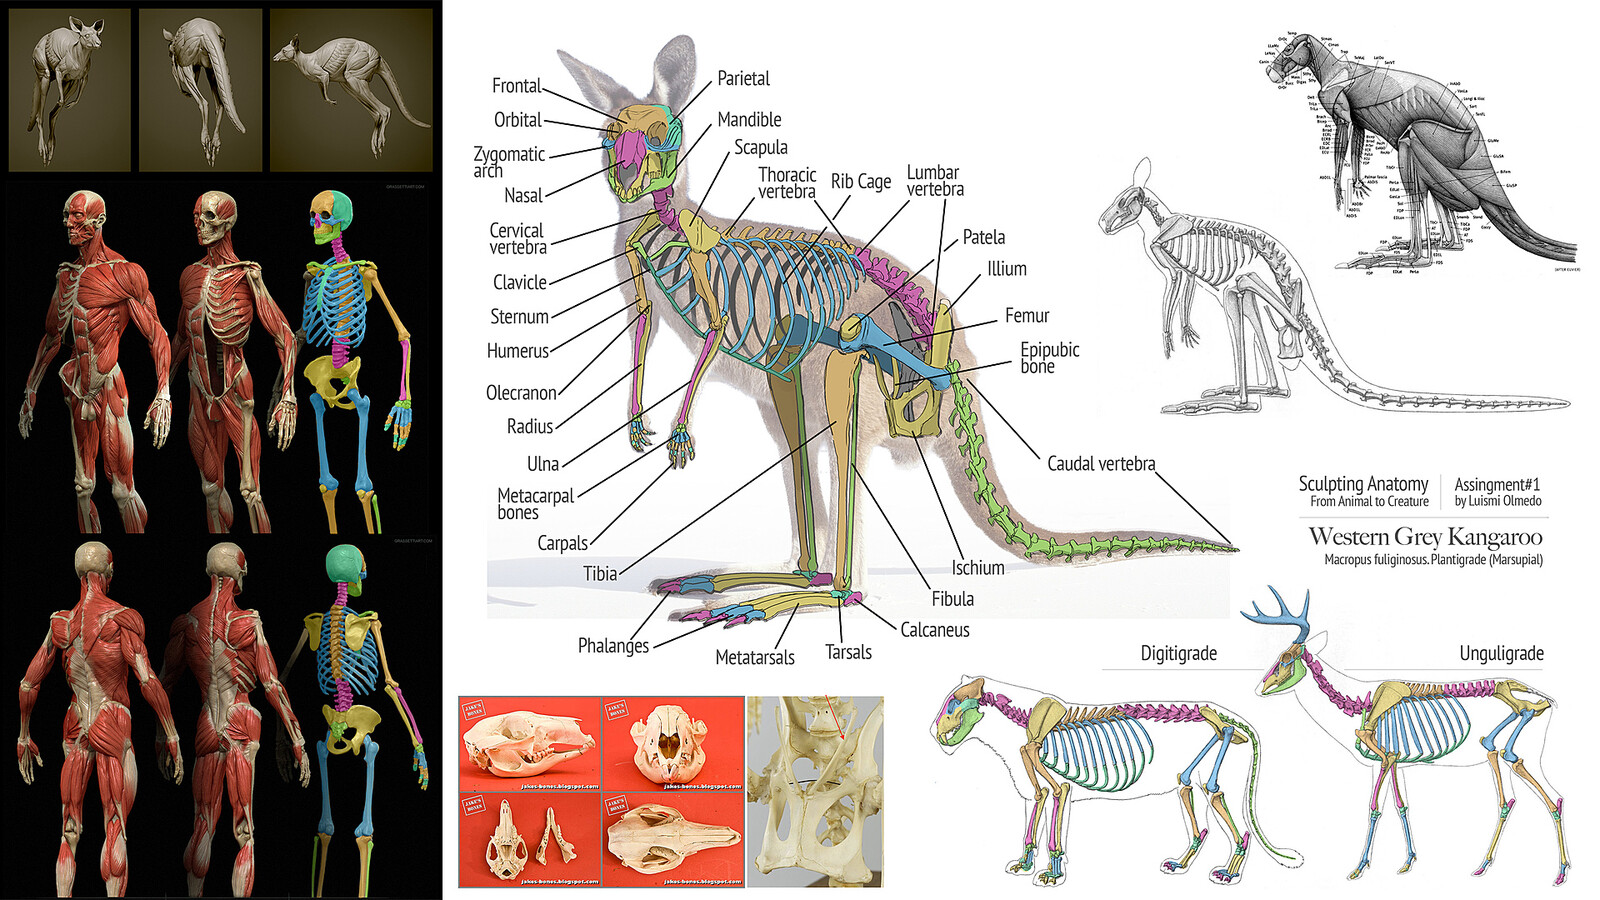 Kangaroo anatomical study and comparison of bones